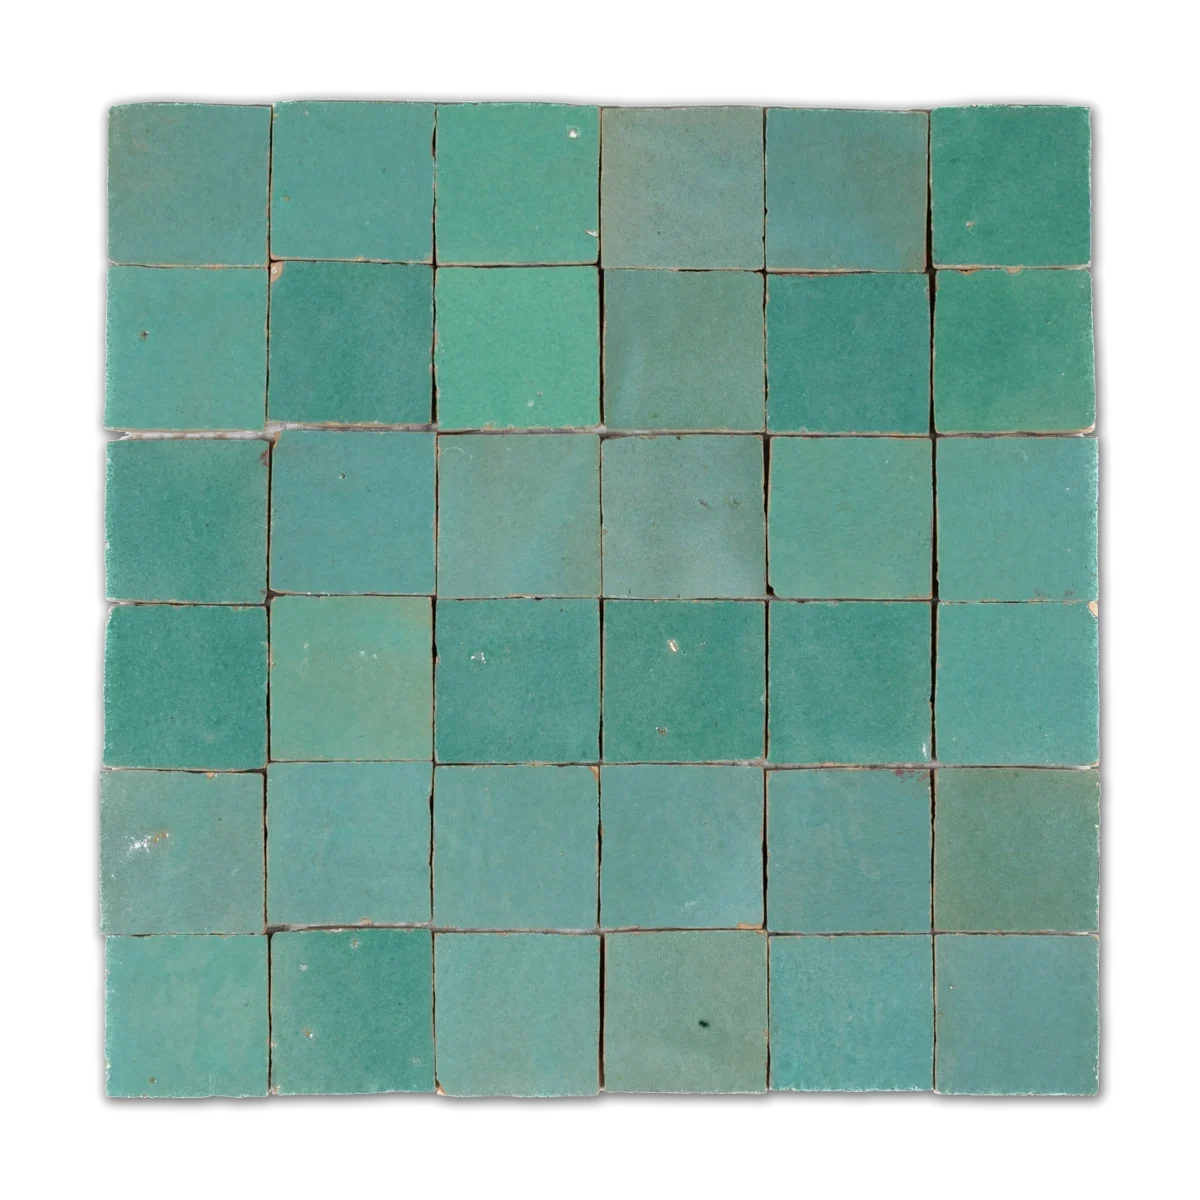 Paradise Zellige 2”x2” Square Mosaic Wall Tile